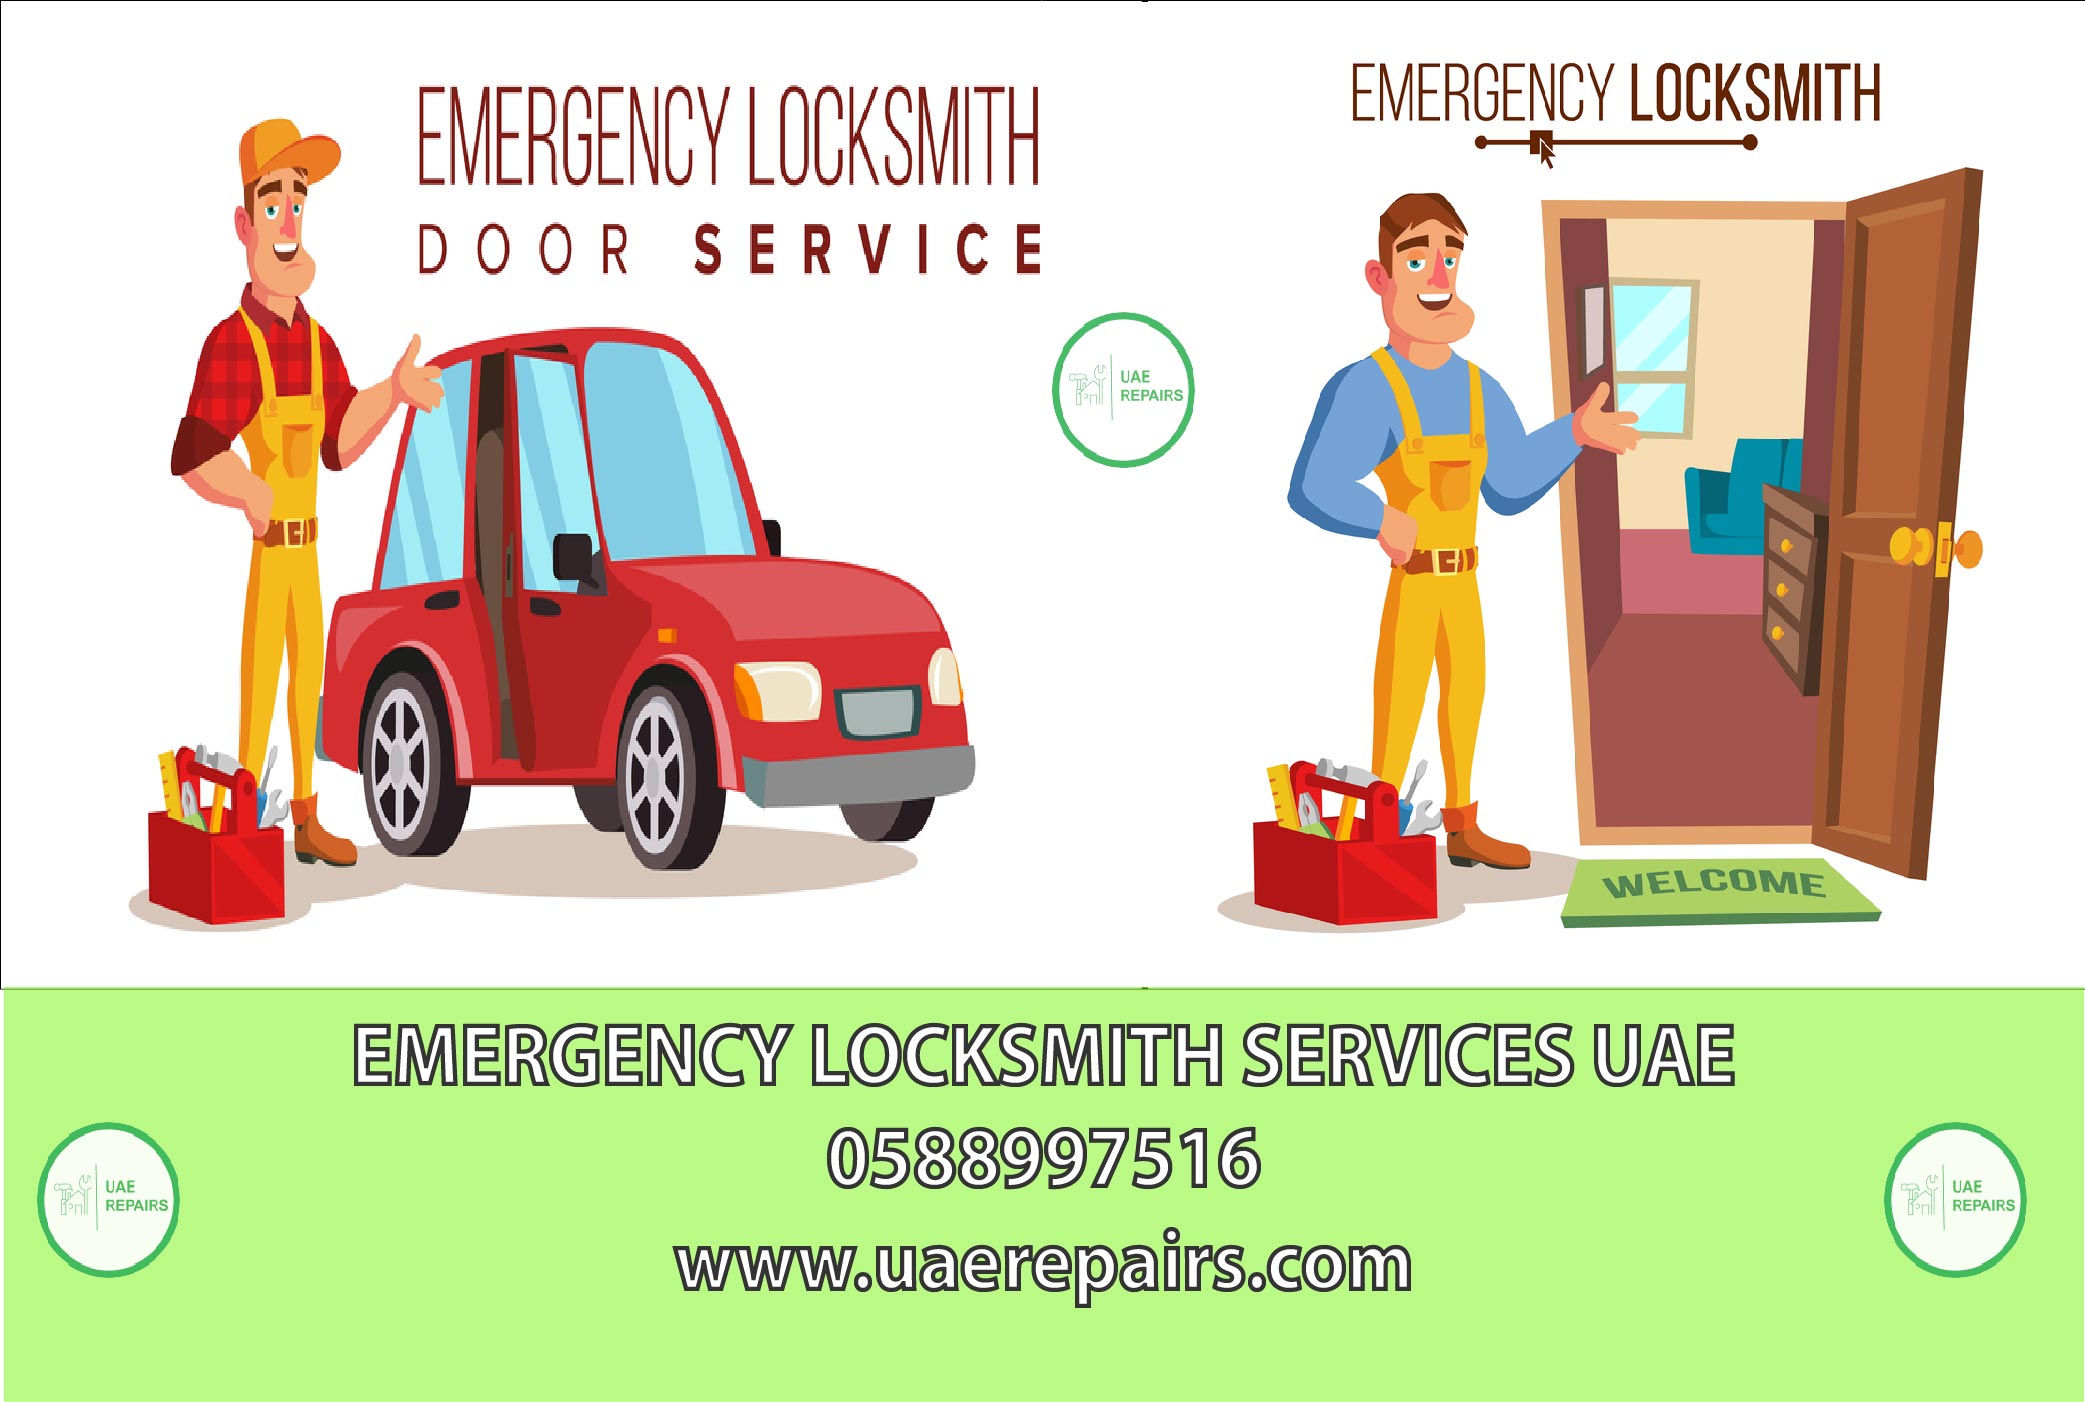 UAE REPAIRS EMERGENCY LOCKSMITH SERIVCE UAE 0588997516